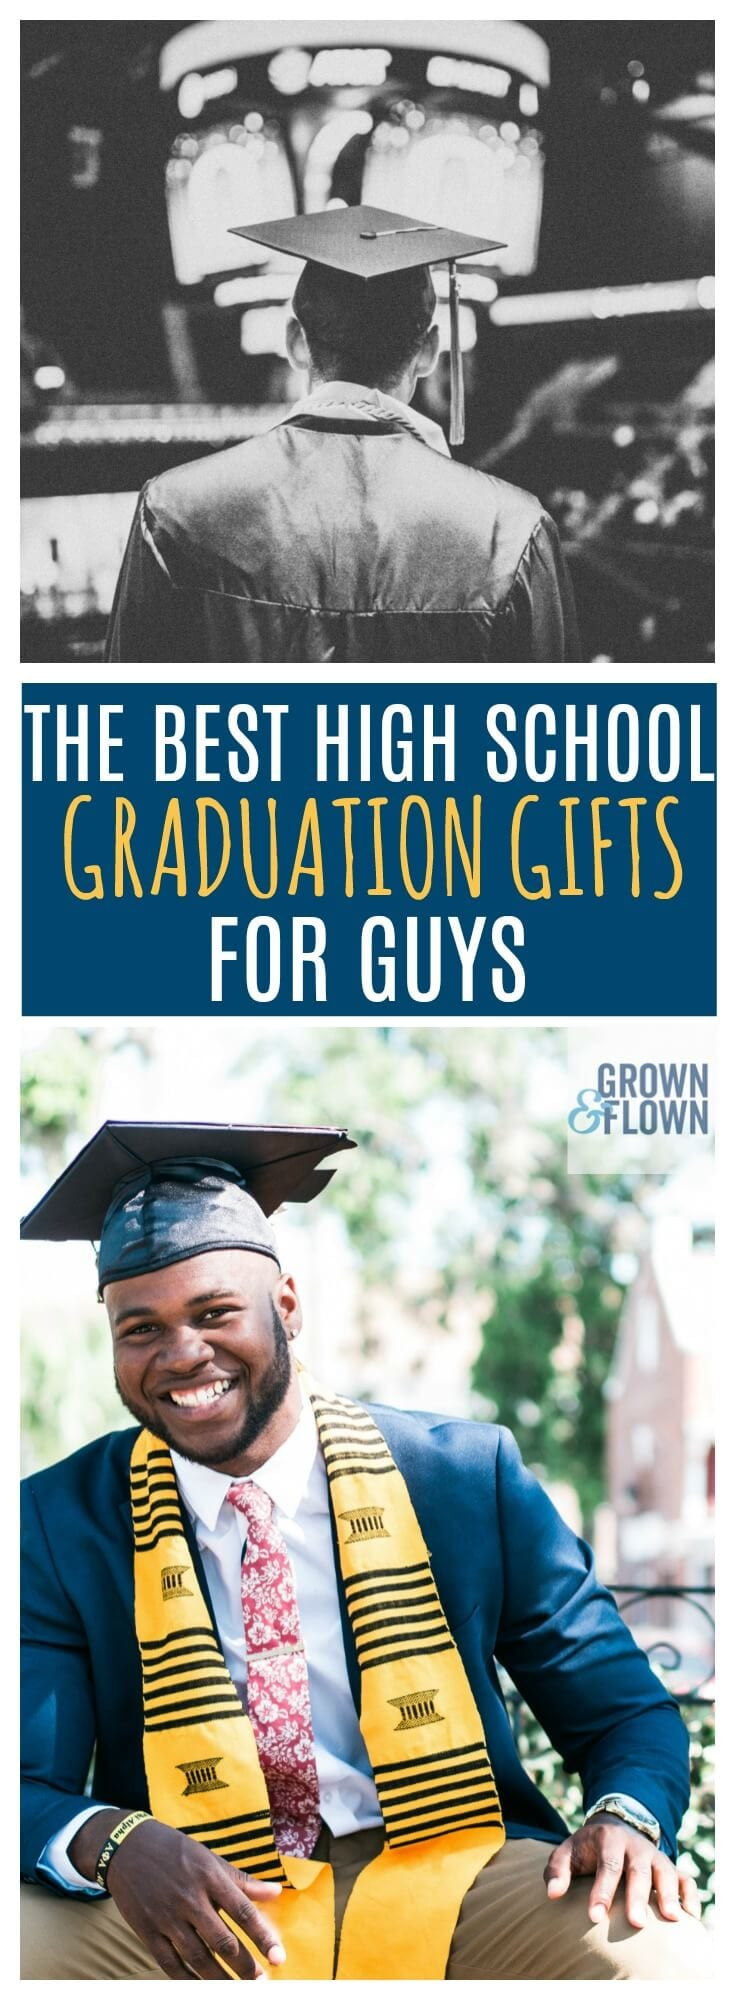 Male High School Graduation Gift Ideas
 2020 High School Graduation Gifts for Guys They Will Love